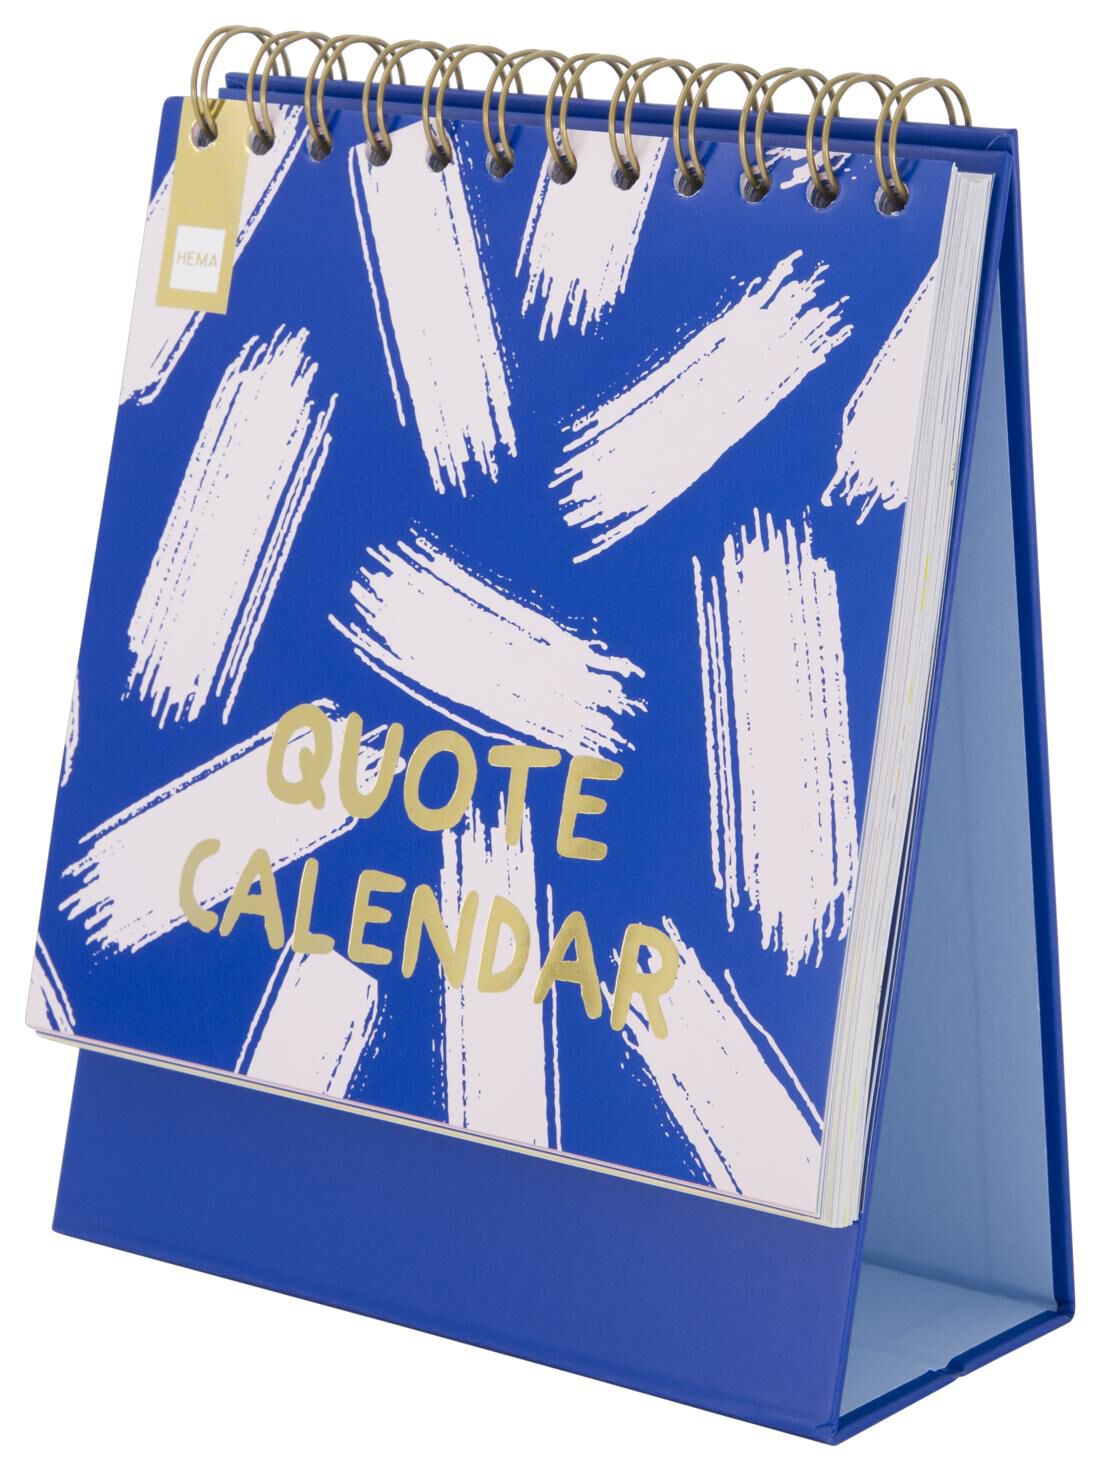 Desk Calendar Slim Colourful 10 Attitude Life Inspirational Motivational Slogans Desk Top